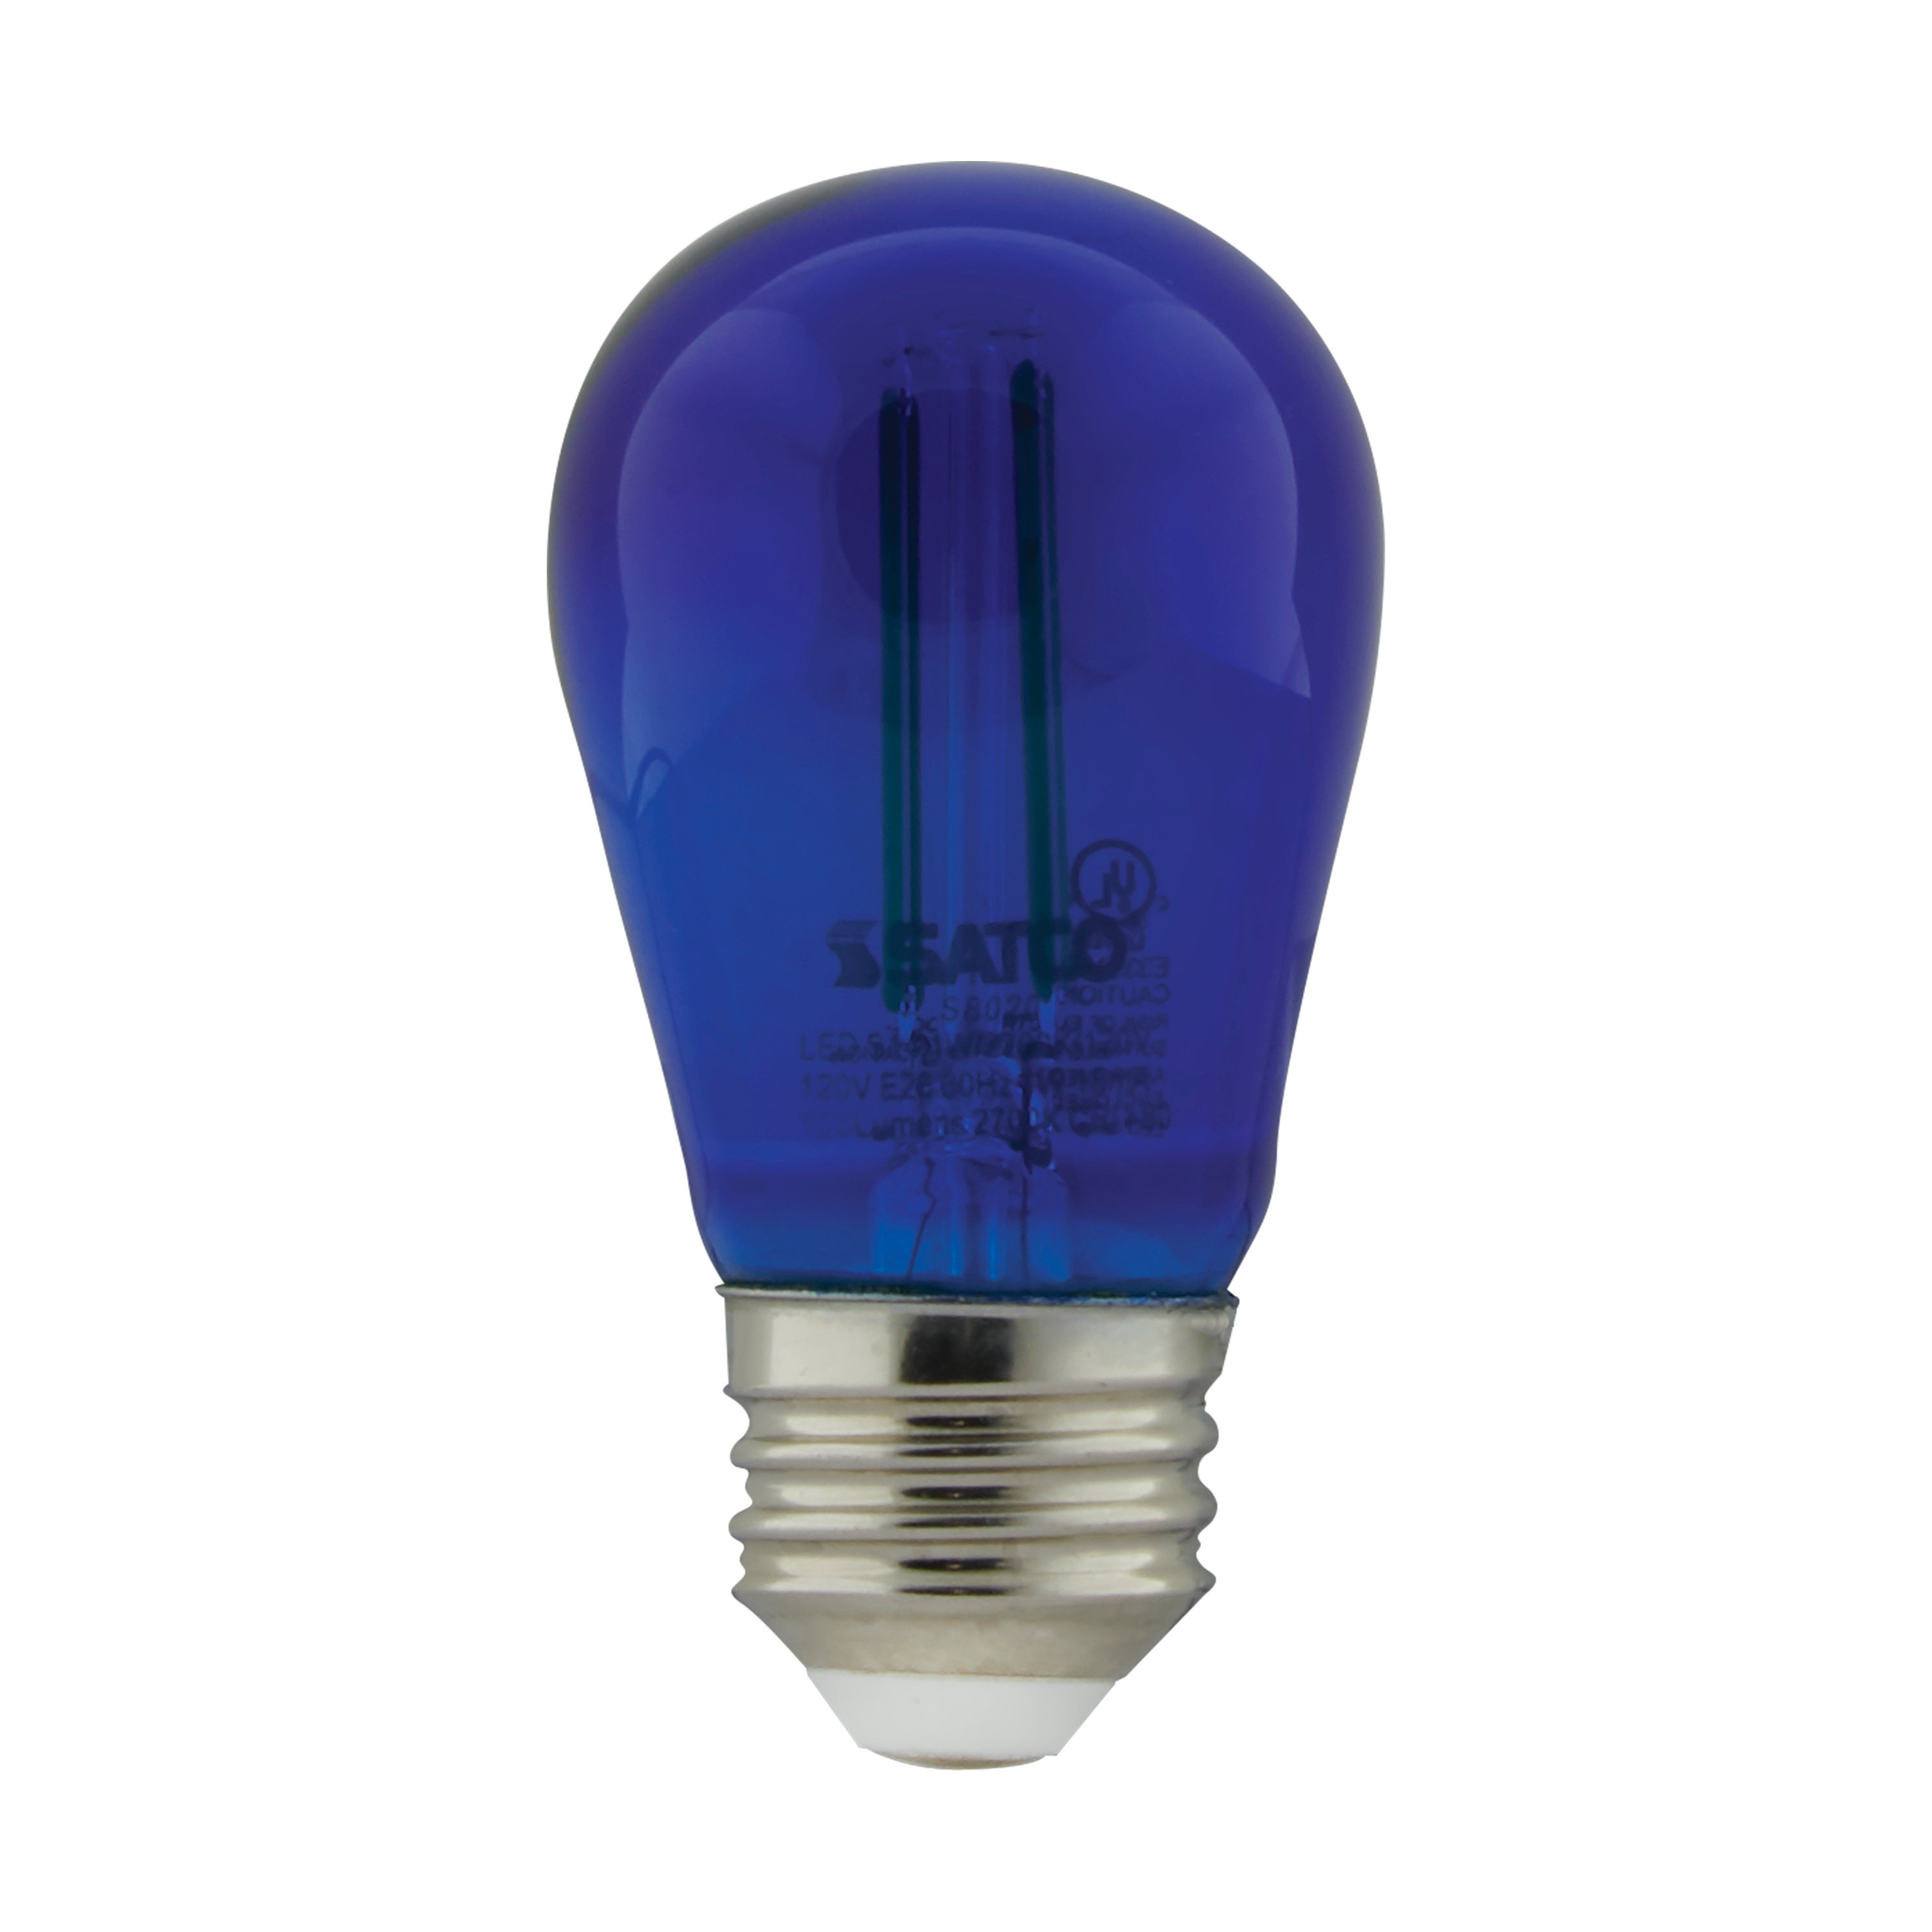 Met andere bands Snooze een vuurtje stoken 1 Watt S14 LED Filament Blue Transparent Glass Bulb E26 Base 120 Volt  Non-Dimmable Pack of 4 - Transparent Blue - Overstock - 33921538